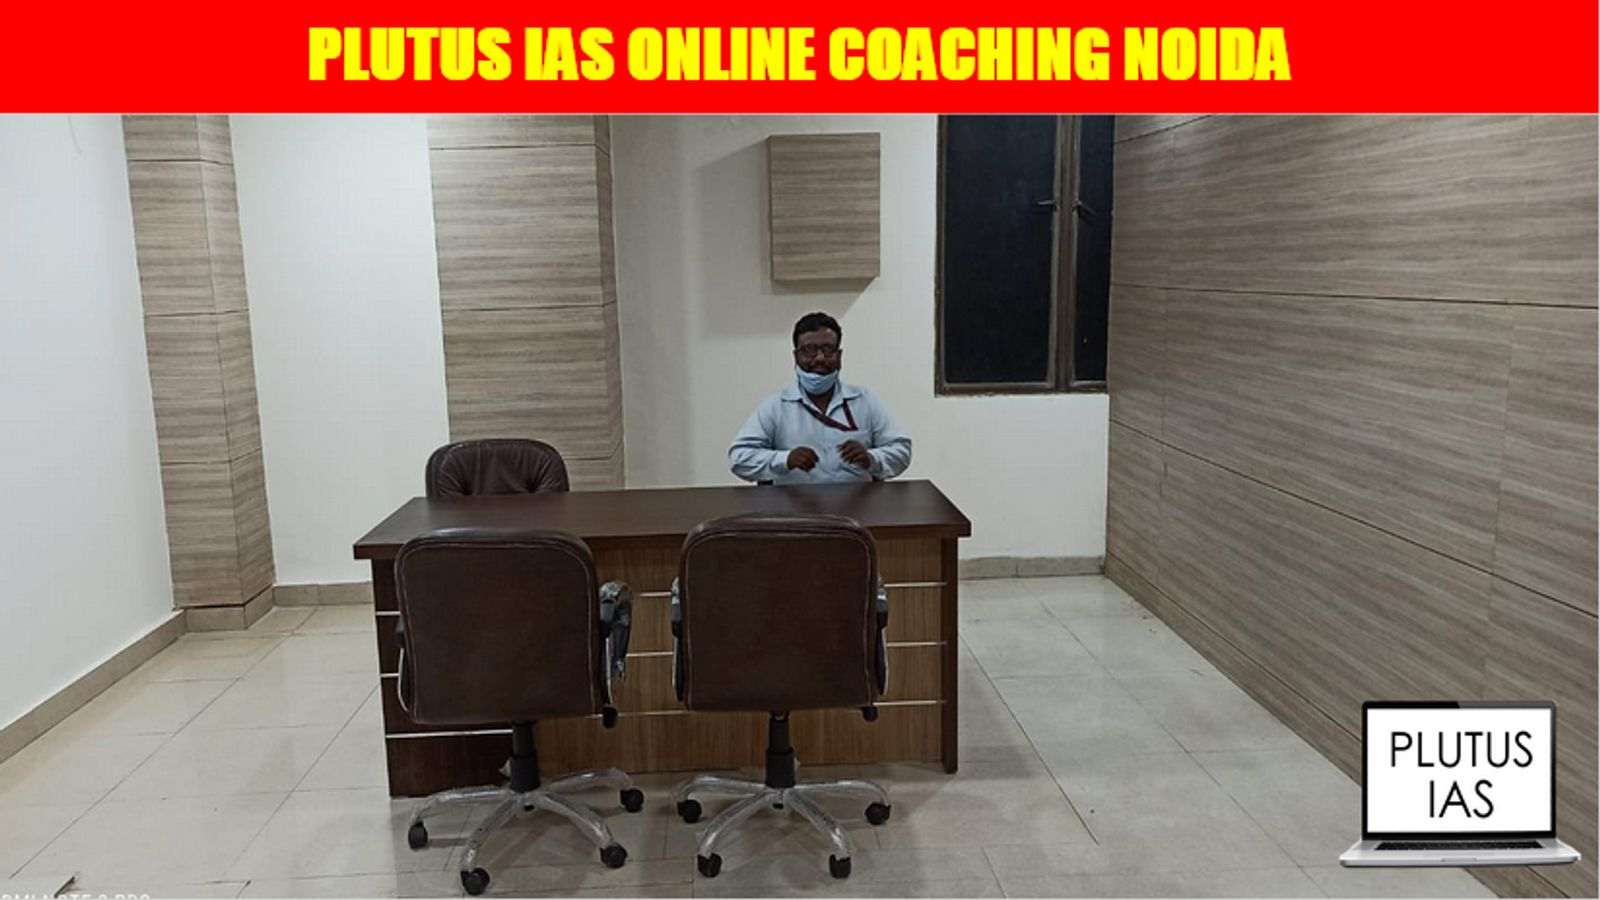 Plutus IAS Online Coaching Noida